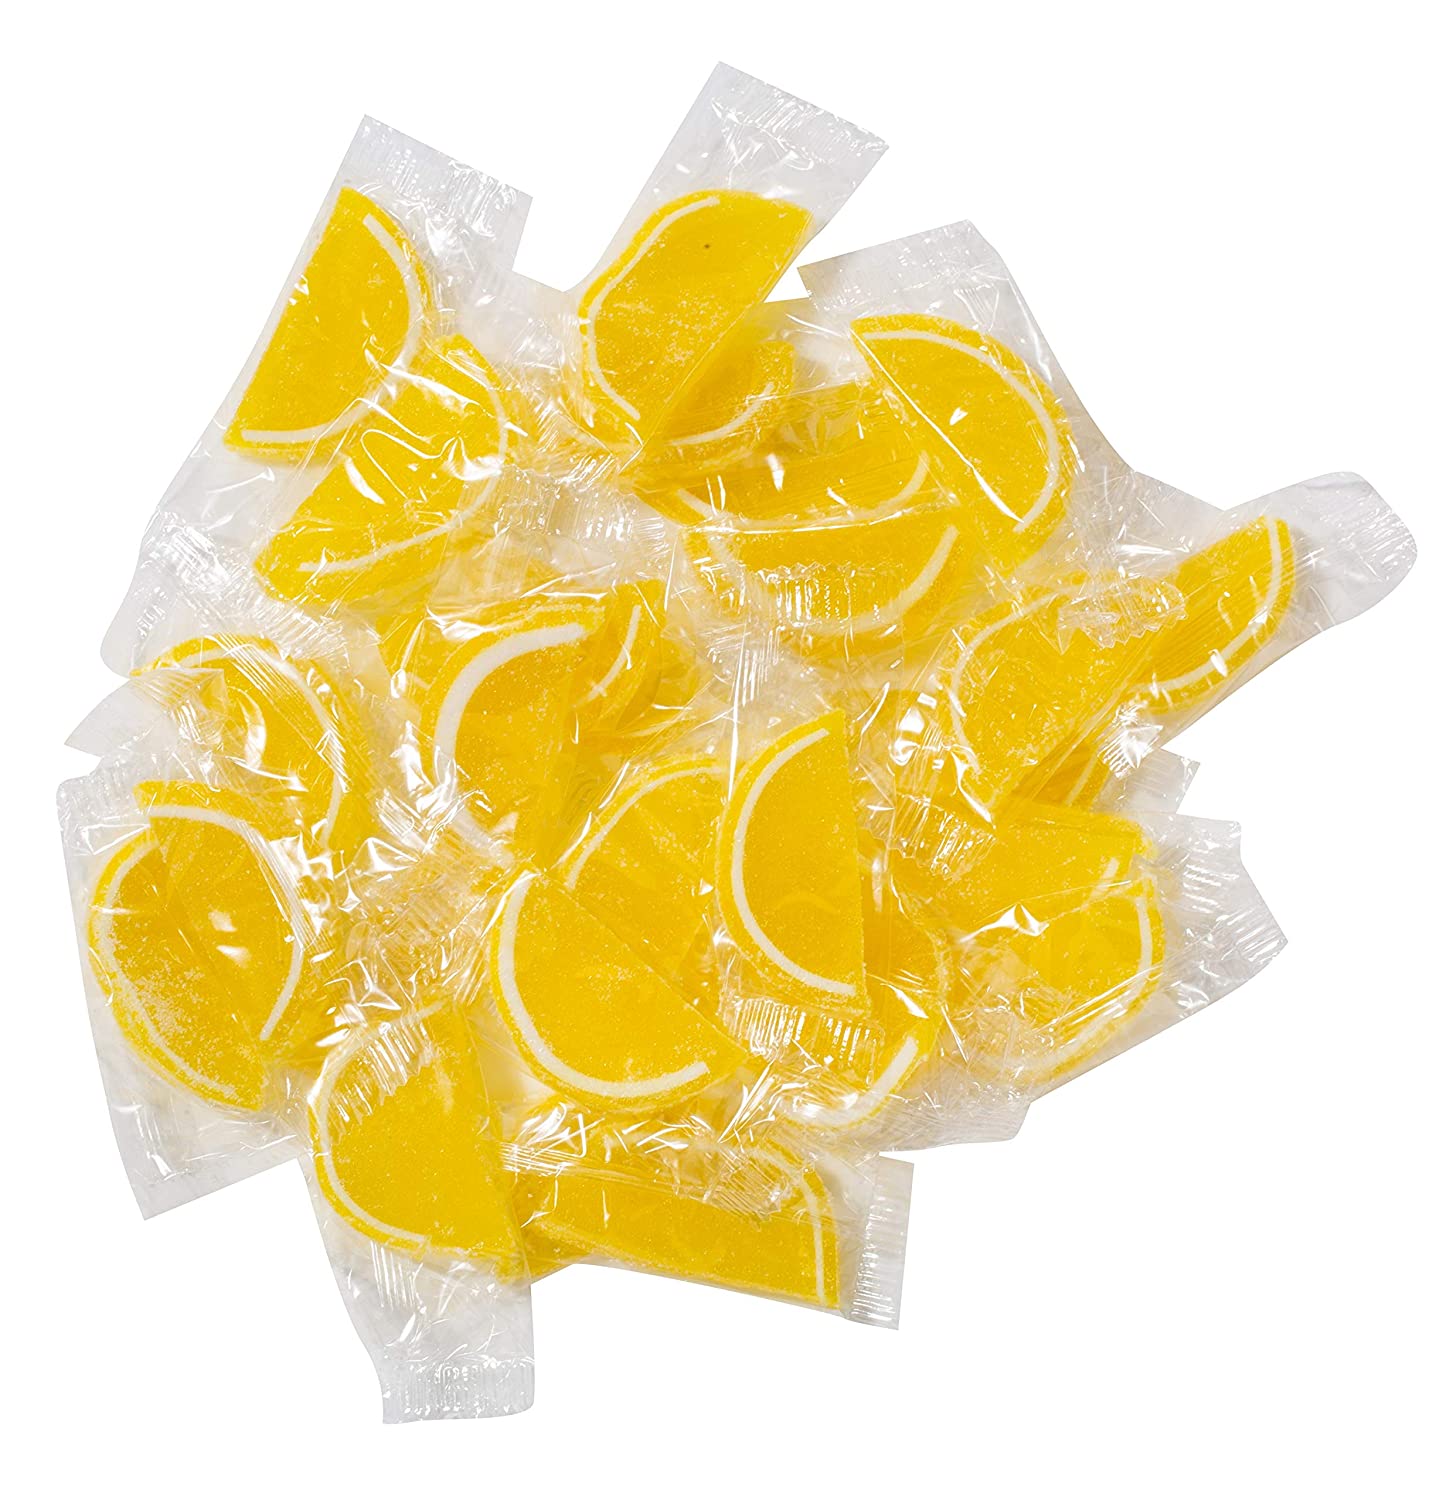 https://sugarlessdelite.com/wp-content/uploads/2022/02/1lb-Sugar-Free-Boston-Fruit-Slices-Lemon-Only.jpg